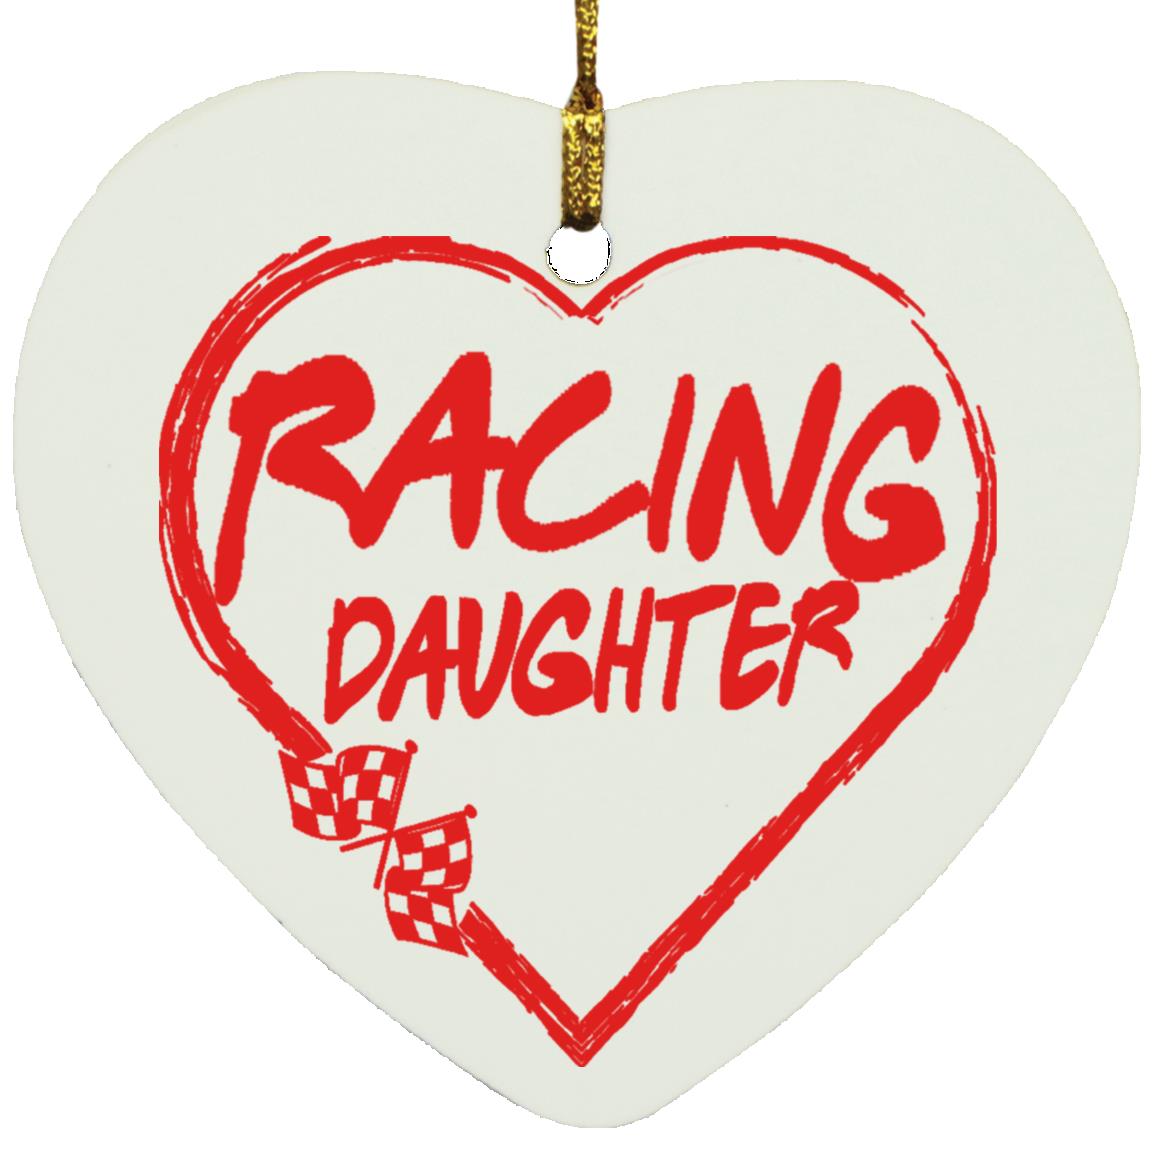 Racing Daughter Heart Heart Ornament